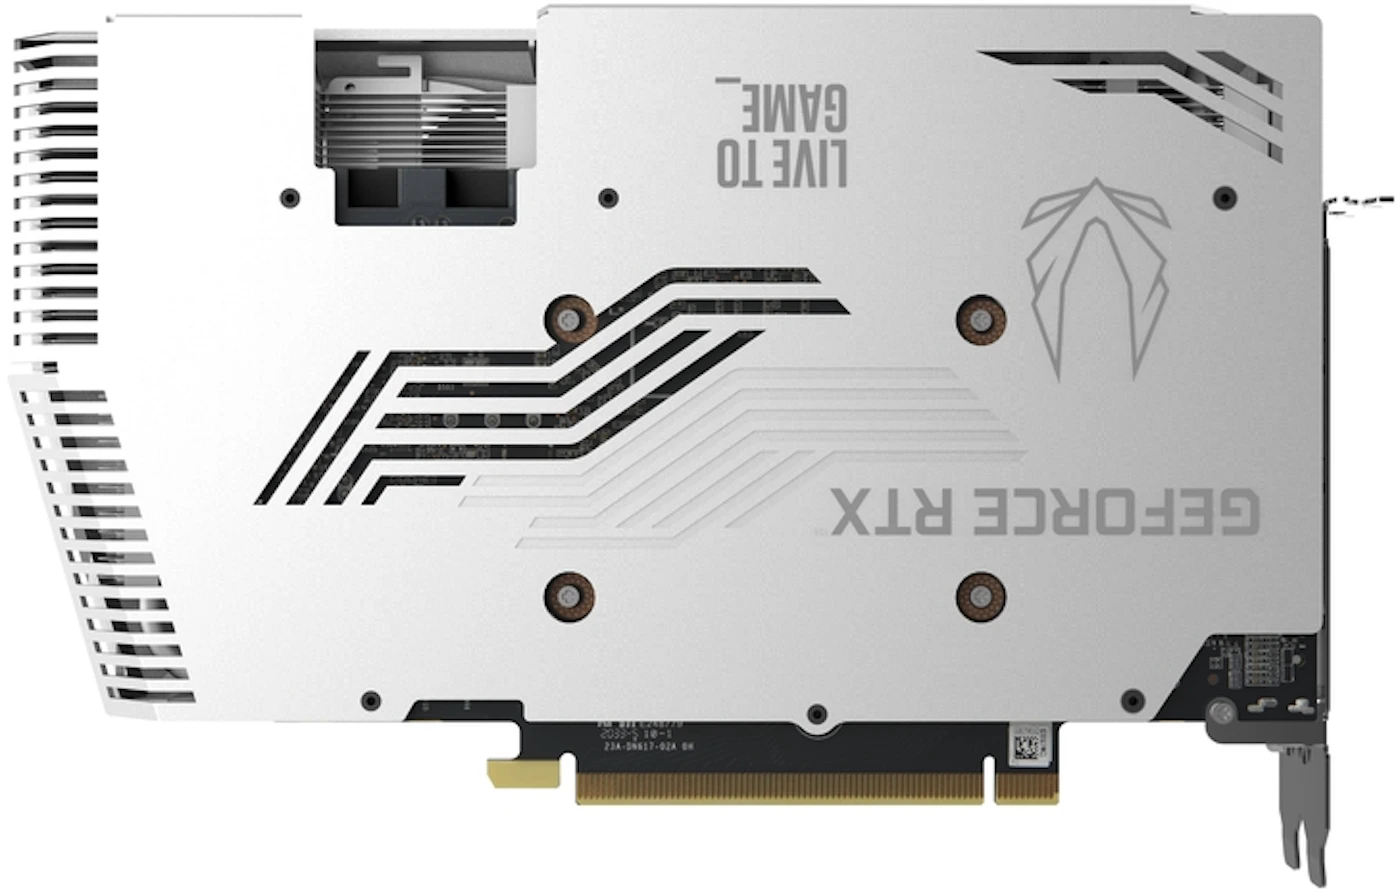 ZOTAC GAMING GeForce RTX 3060 Ti GDDR6X Twin Edge White Edition